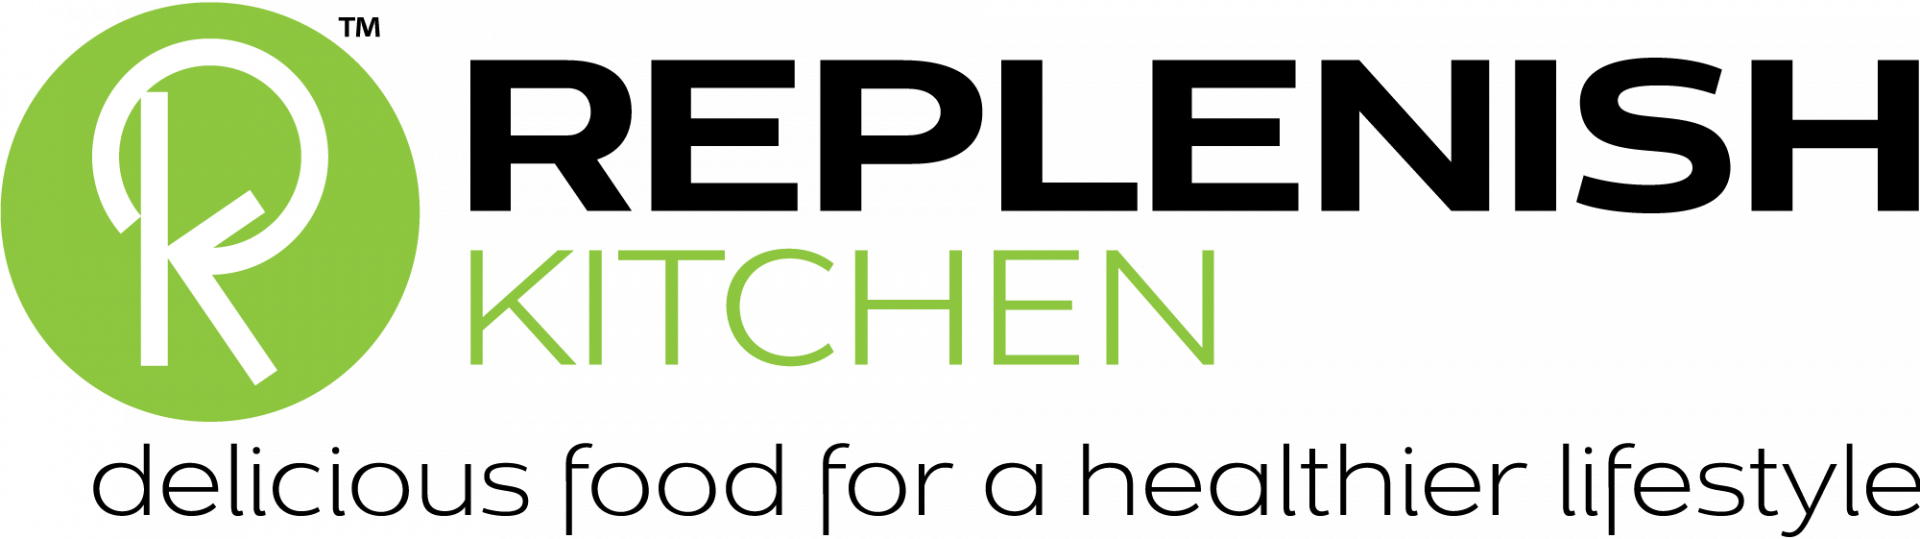 replenish kitchen logo